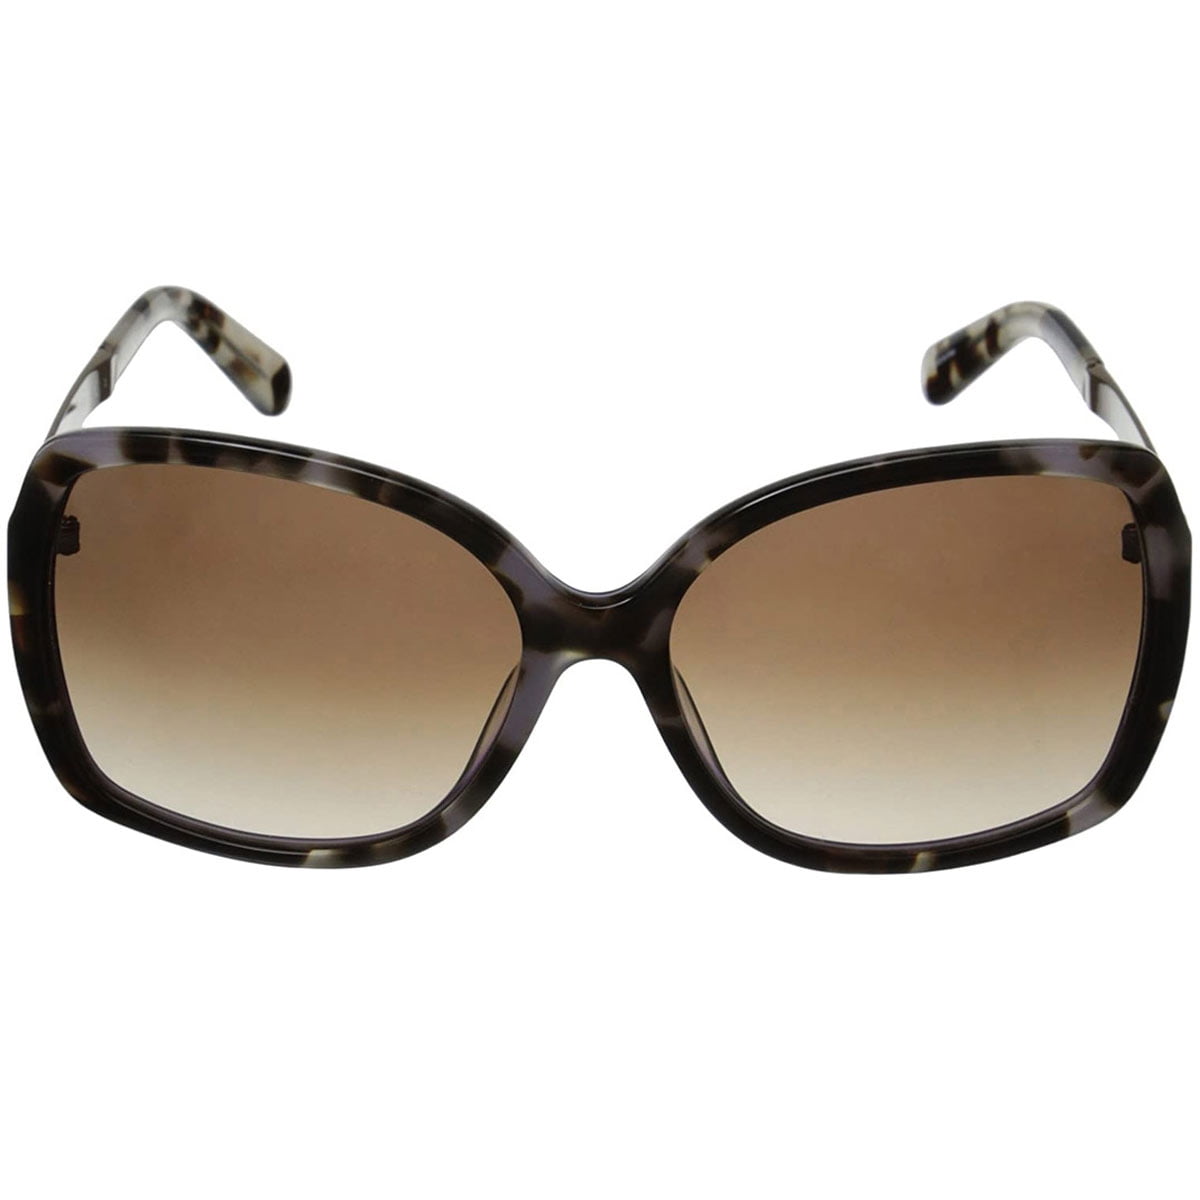 Kate Spade Darilynn-S 0W05-B1 Women's Darilynn-S Casual Sunglasses -  